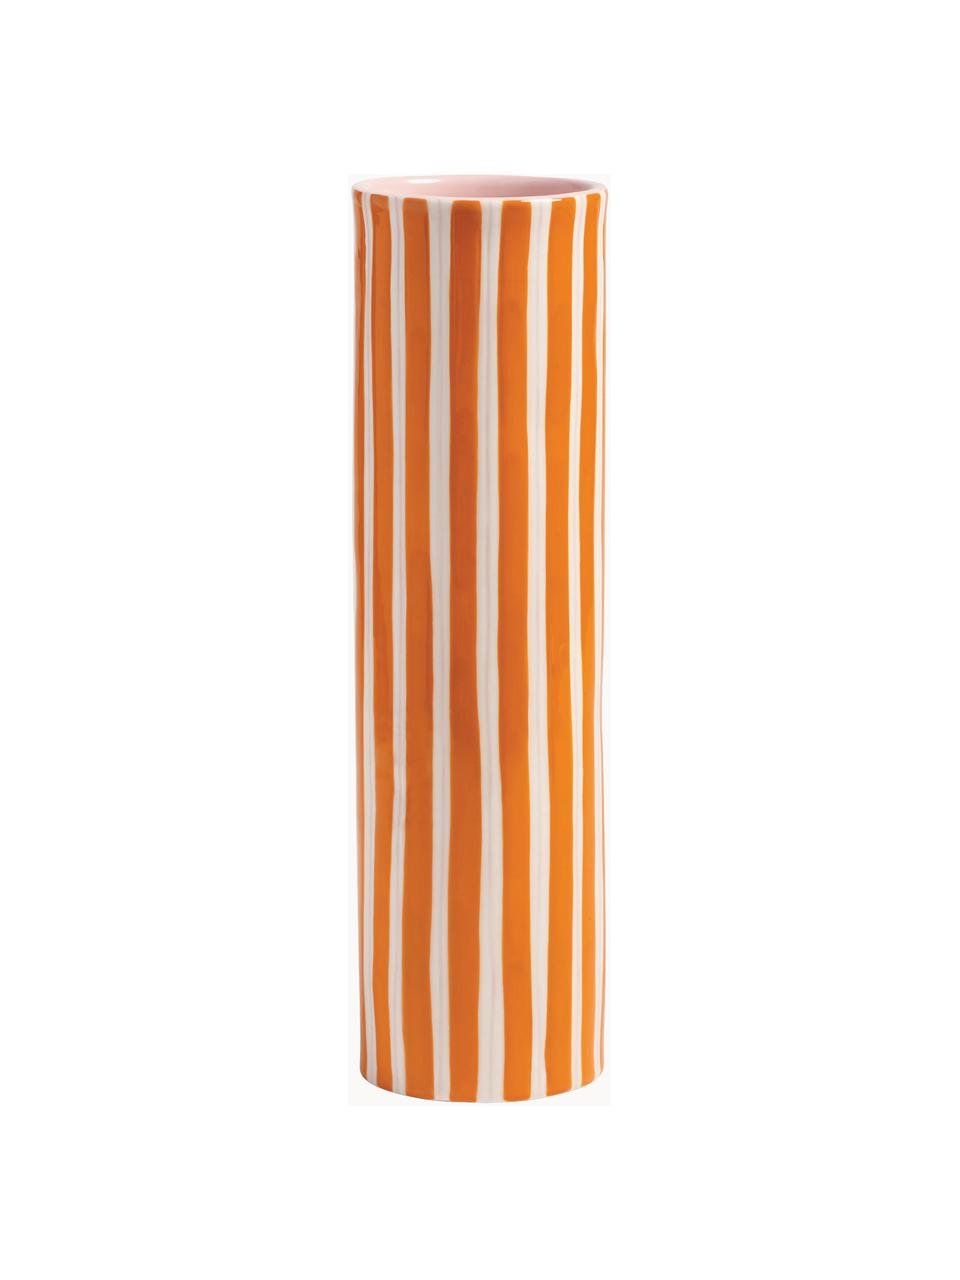 Vaso dipinto a mano in porcellana Ray, alt. 29 cm, Porcellana, Arancione, bianco latte, rosa chiaro, Ø 8 x Alt. 29 cm